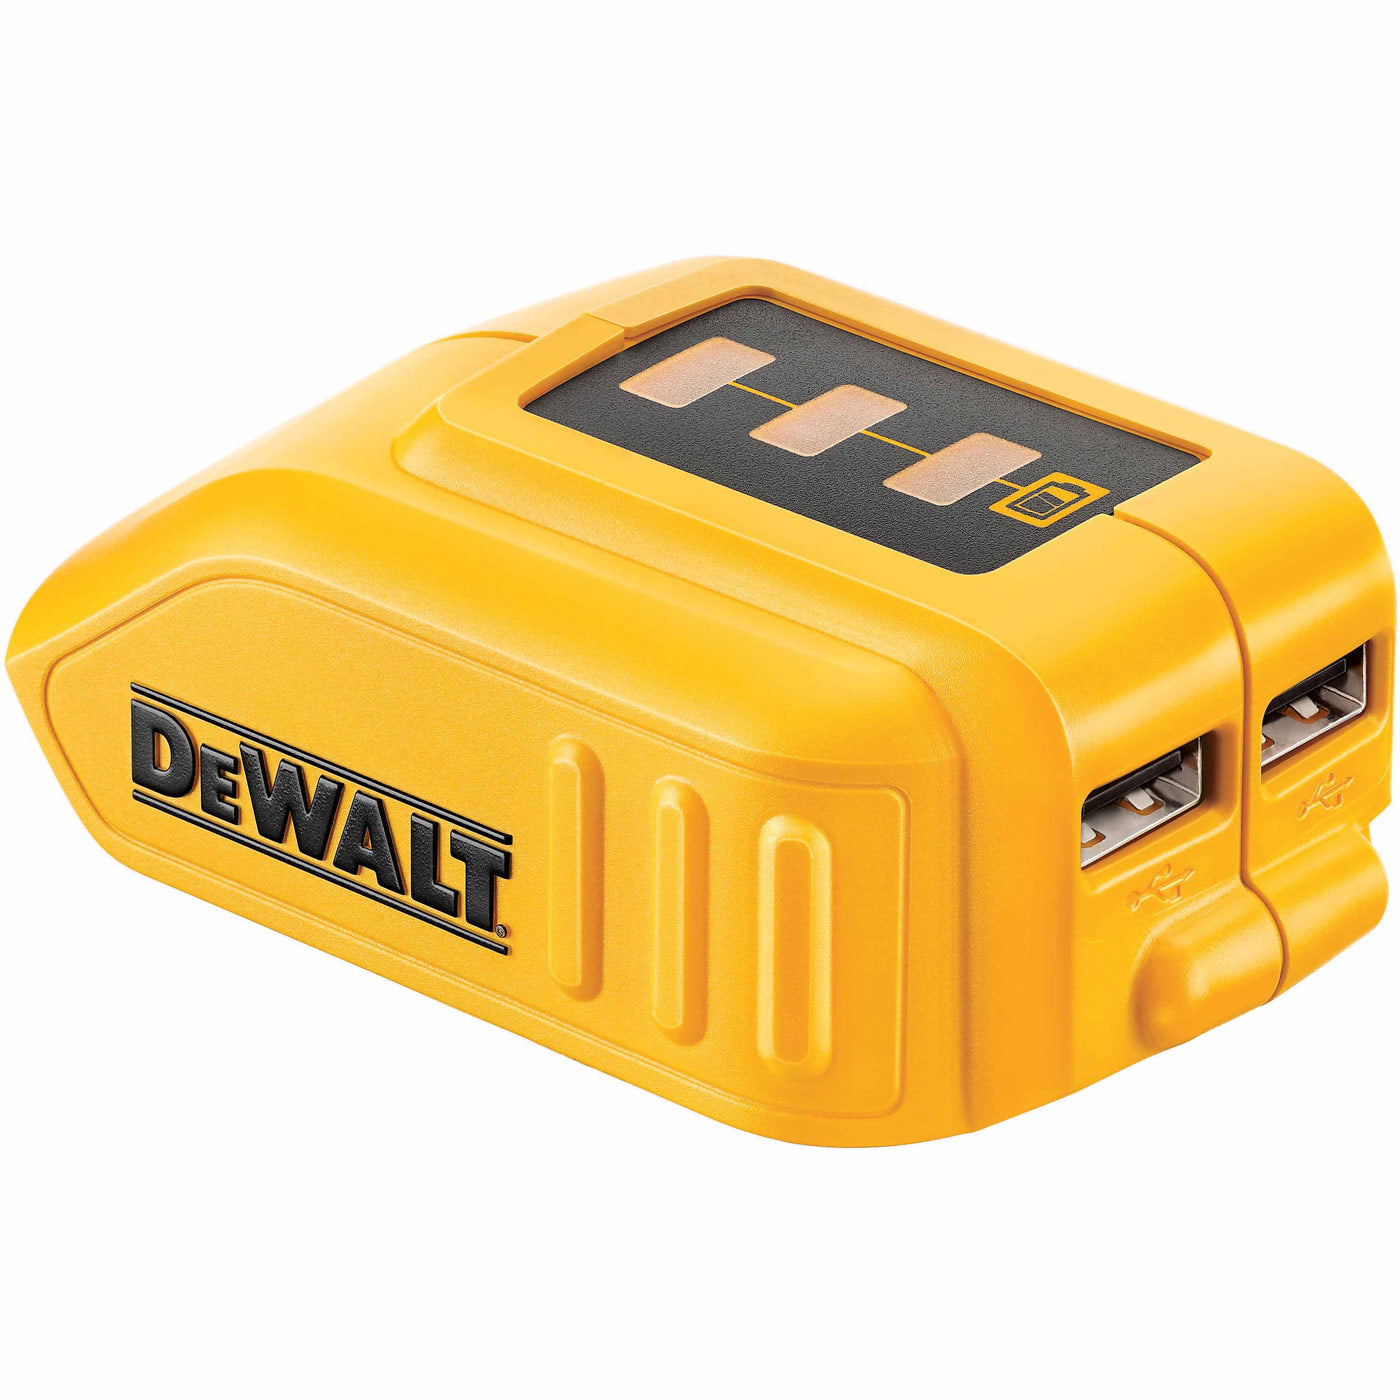 Dewalt DCB090 12V/20V Max USB Power Source